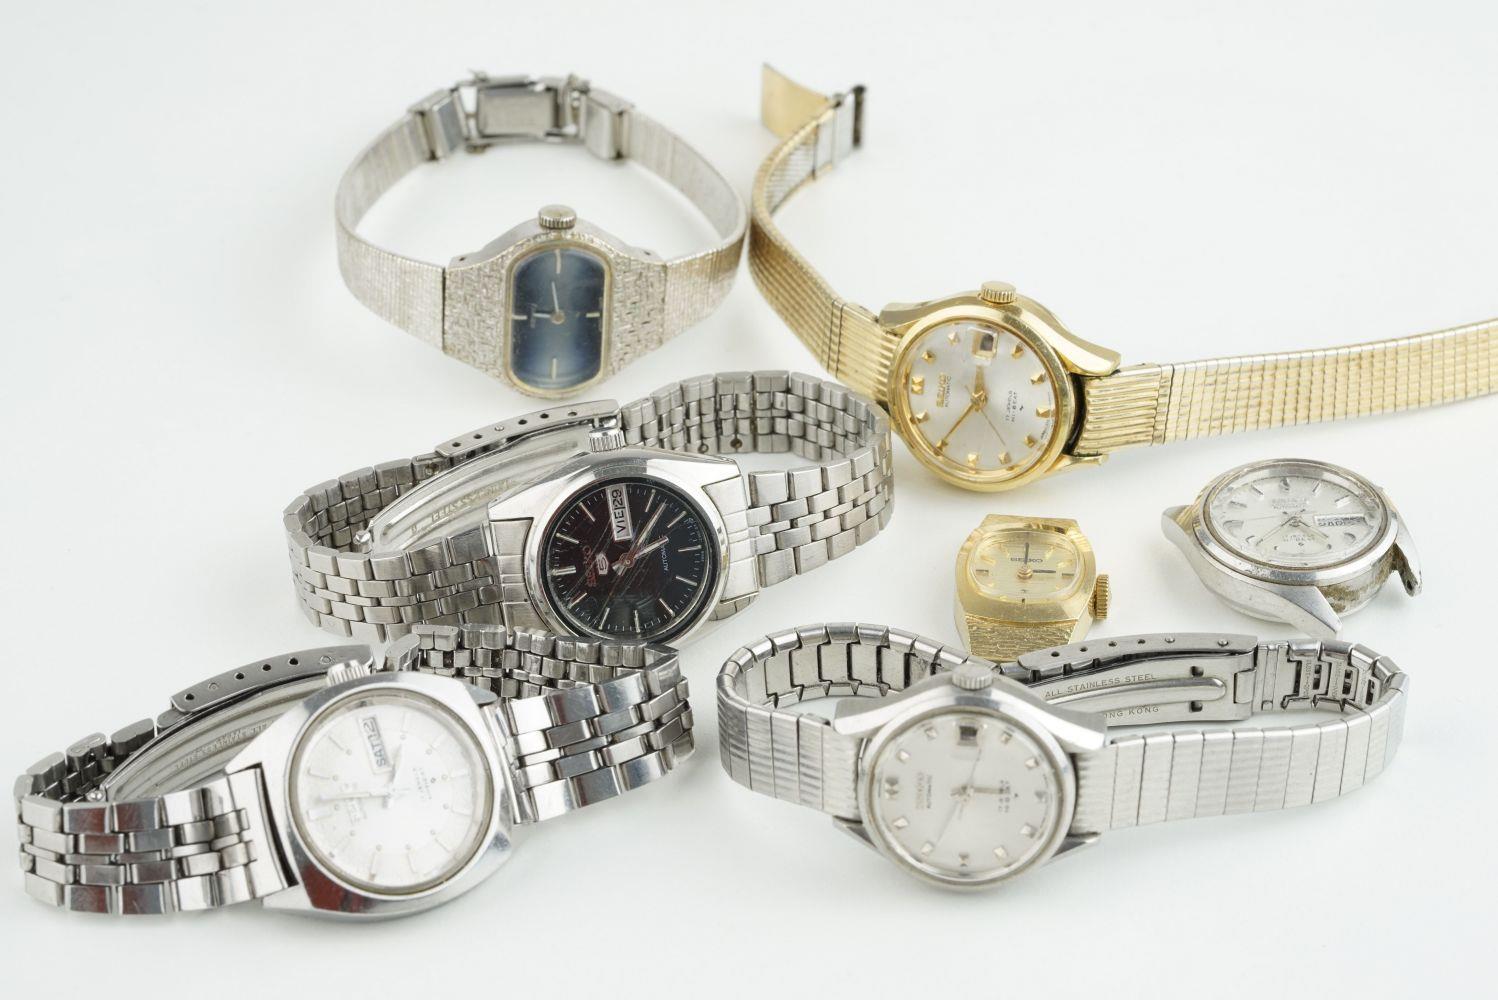 GROUP OF LADIES SEIKO WRISTWATCH, job lot of 7 seiko wristwatches.*** Please view images carefully